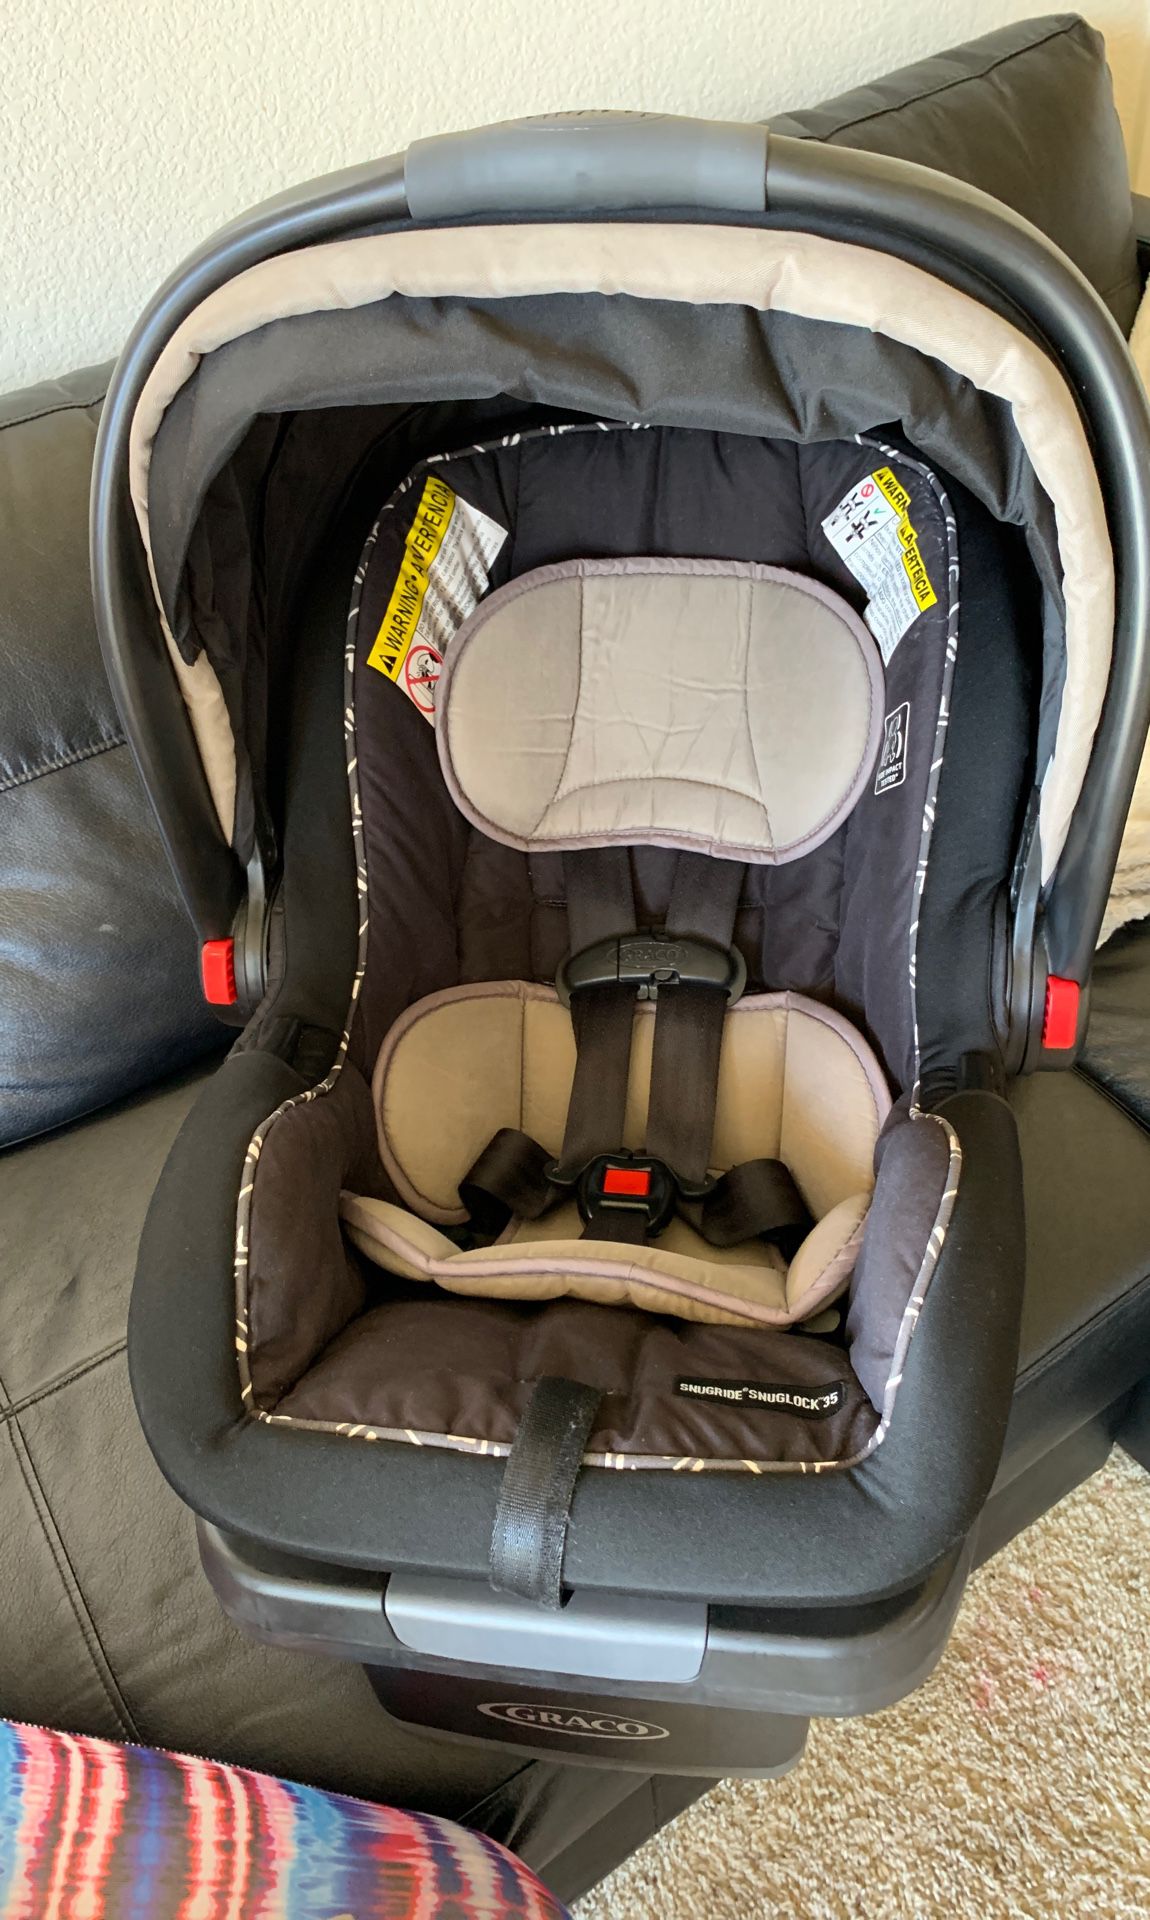 Graco baby car seat gender neutral!